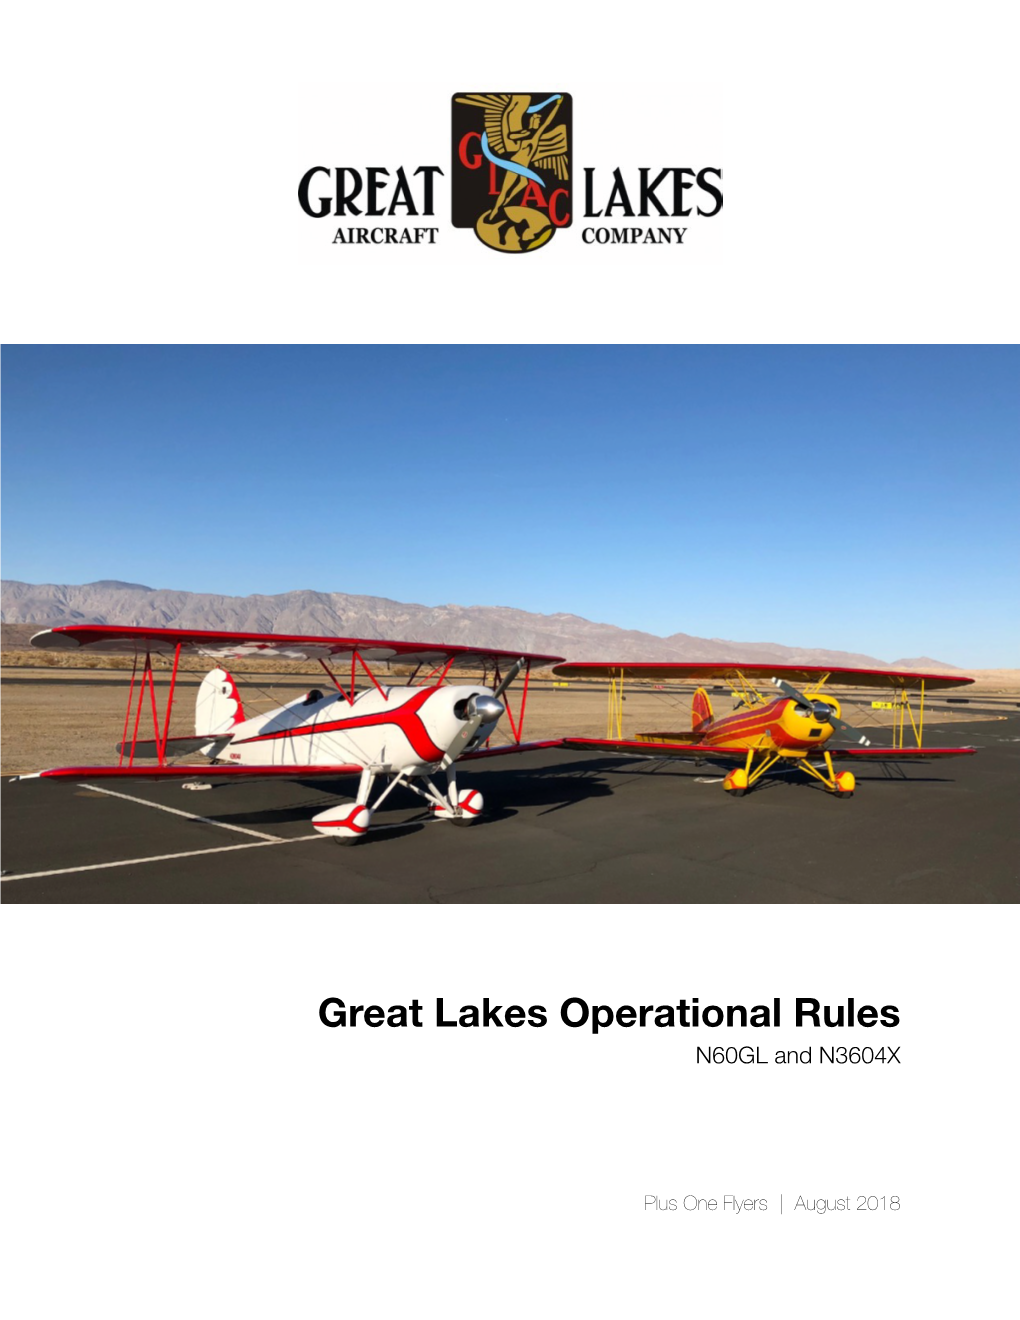 Great Lakes Operational Rules N60GL and N3604X